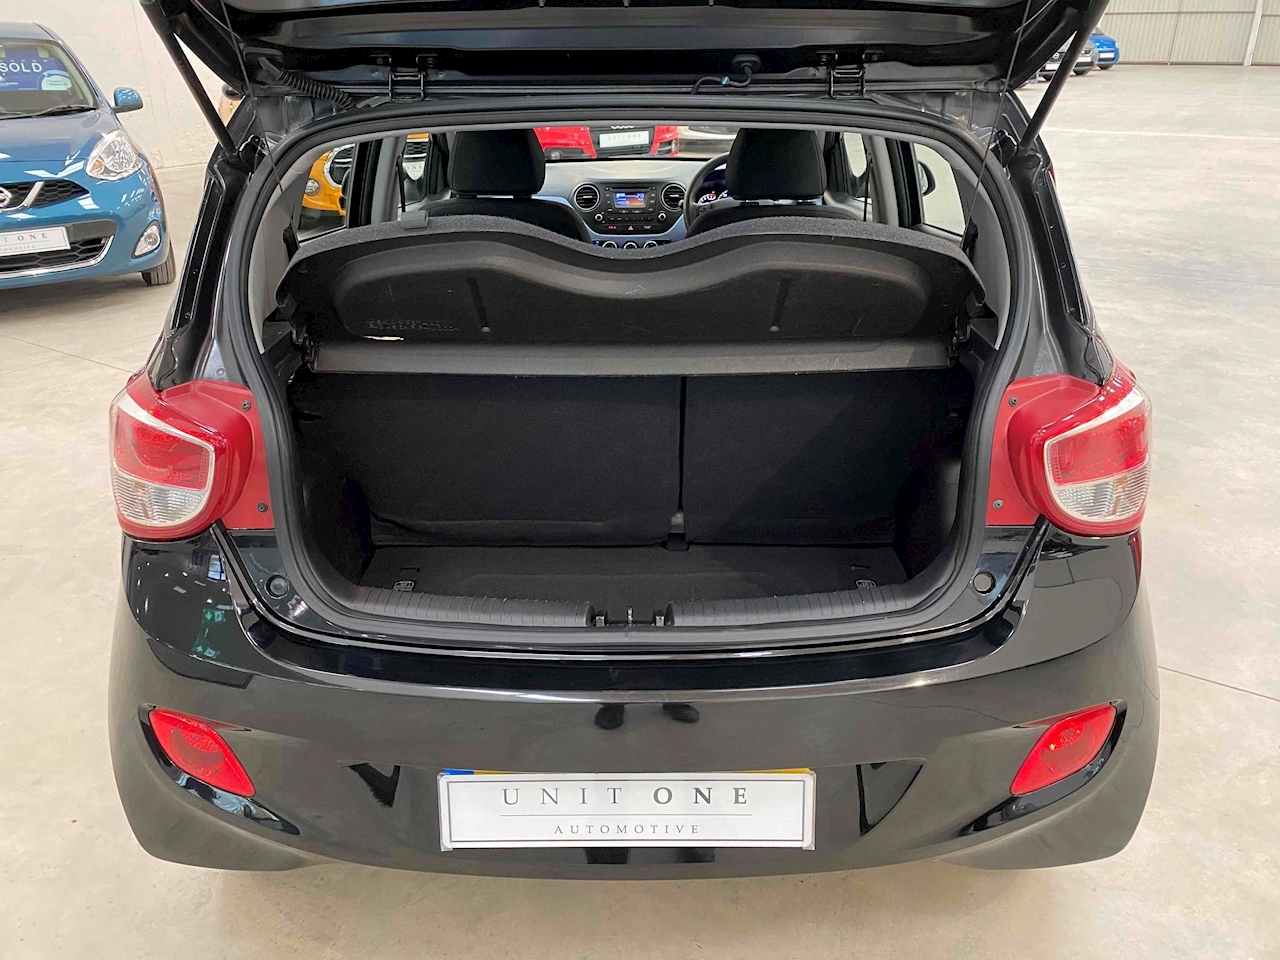 Used 2016 Hyundai I10 Se Hatchback 1.2 Manual Petrol For Sale in West  Sussex